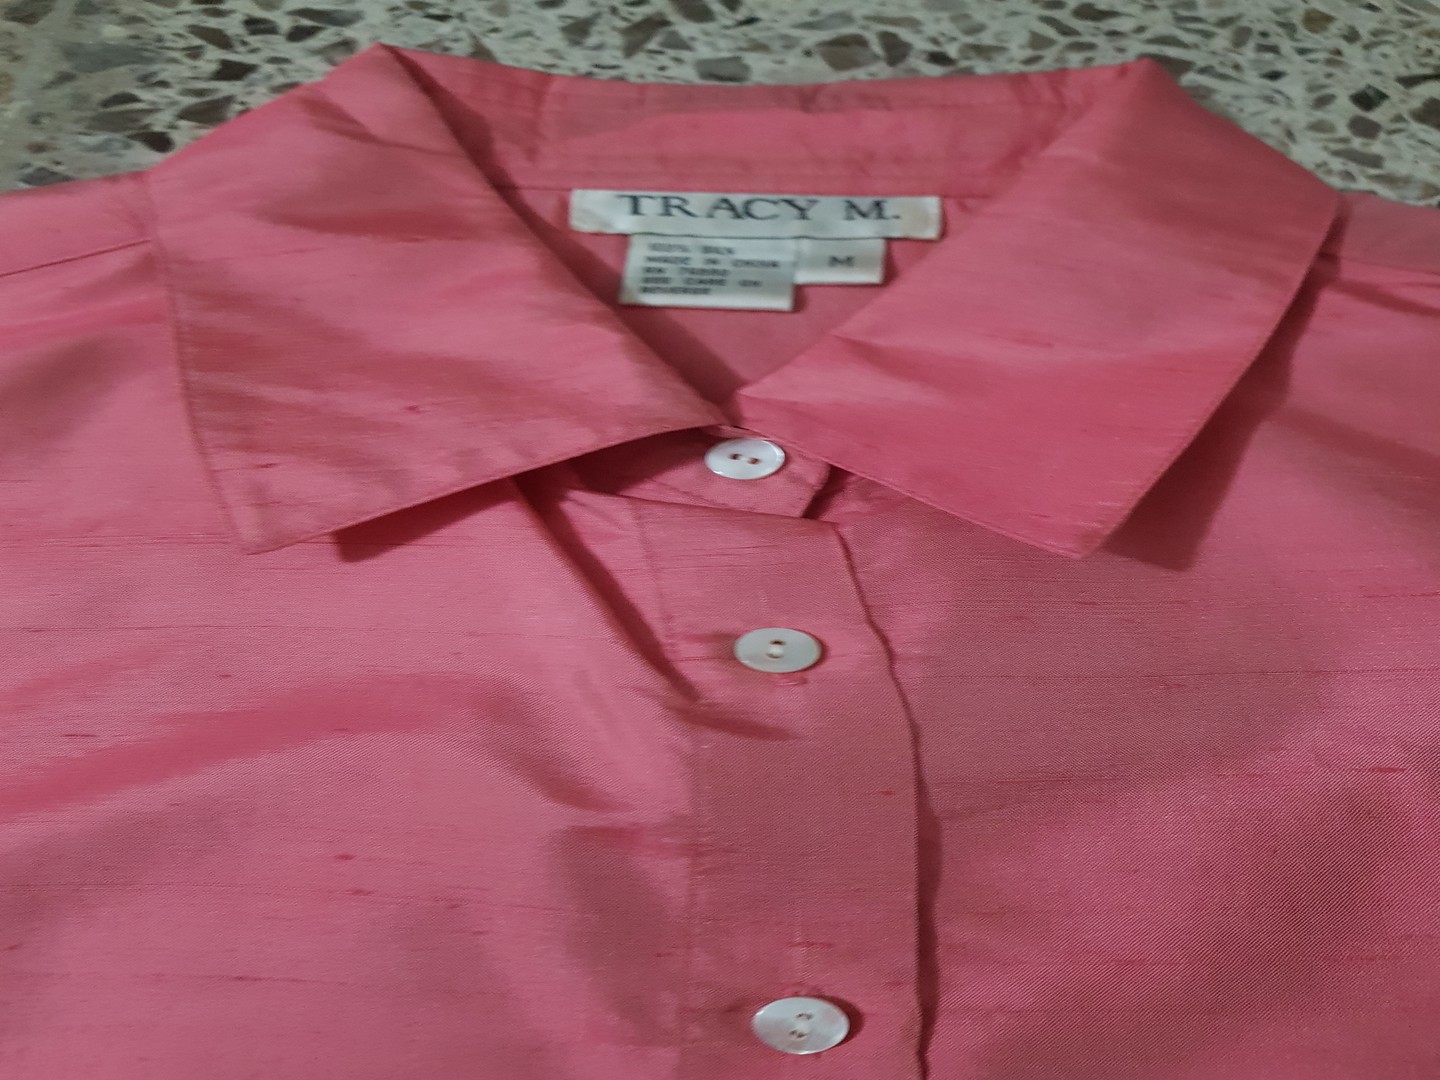 ropa para mujer - Elegante blusa camisera de seda pura, tamaño M, marca Tracy M. 2